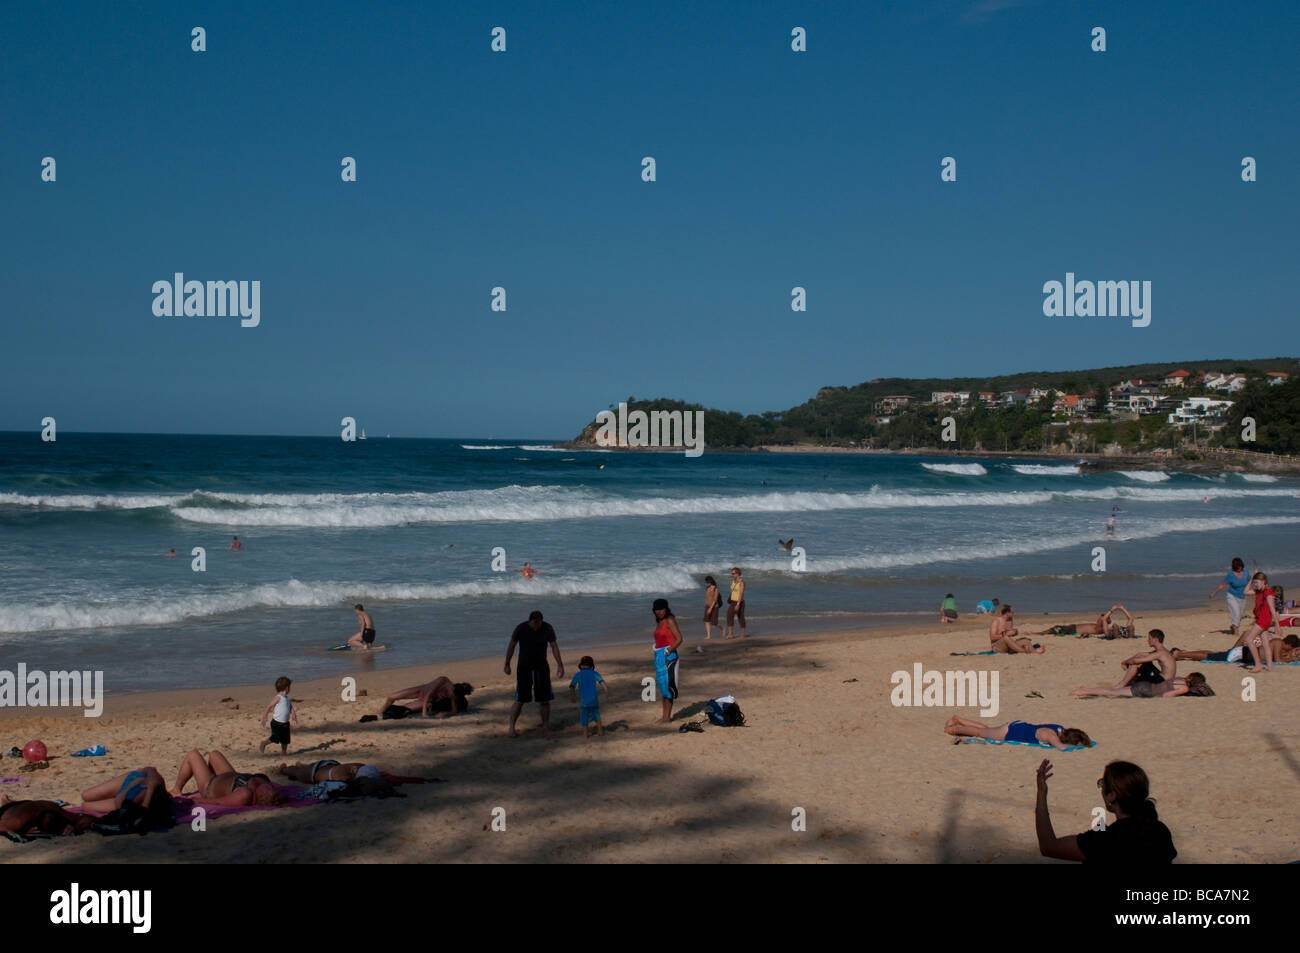 People sunbathing on Manly beach, South Steyne, Sydney, NSW, Australia Stock Photo